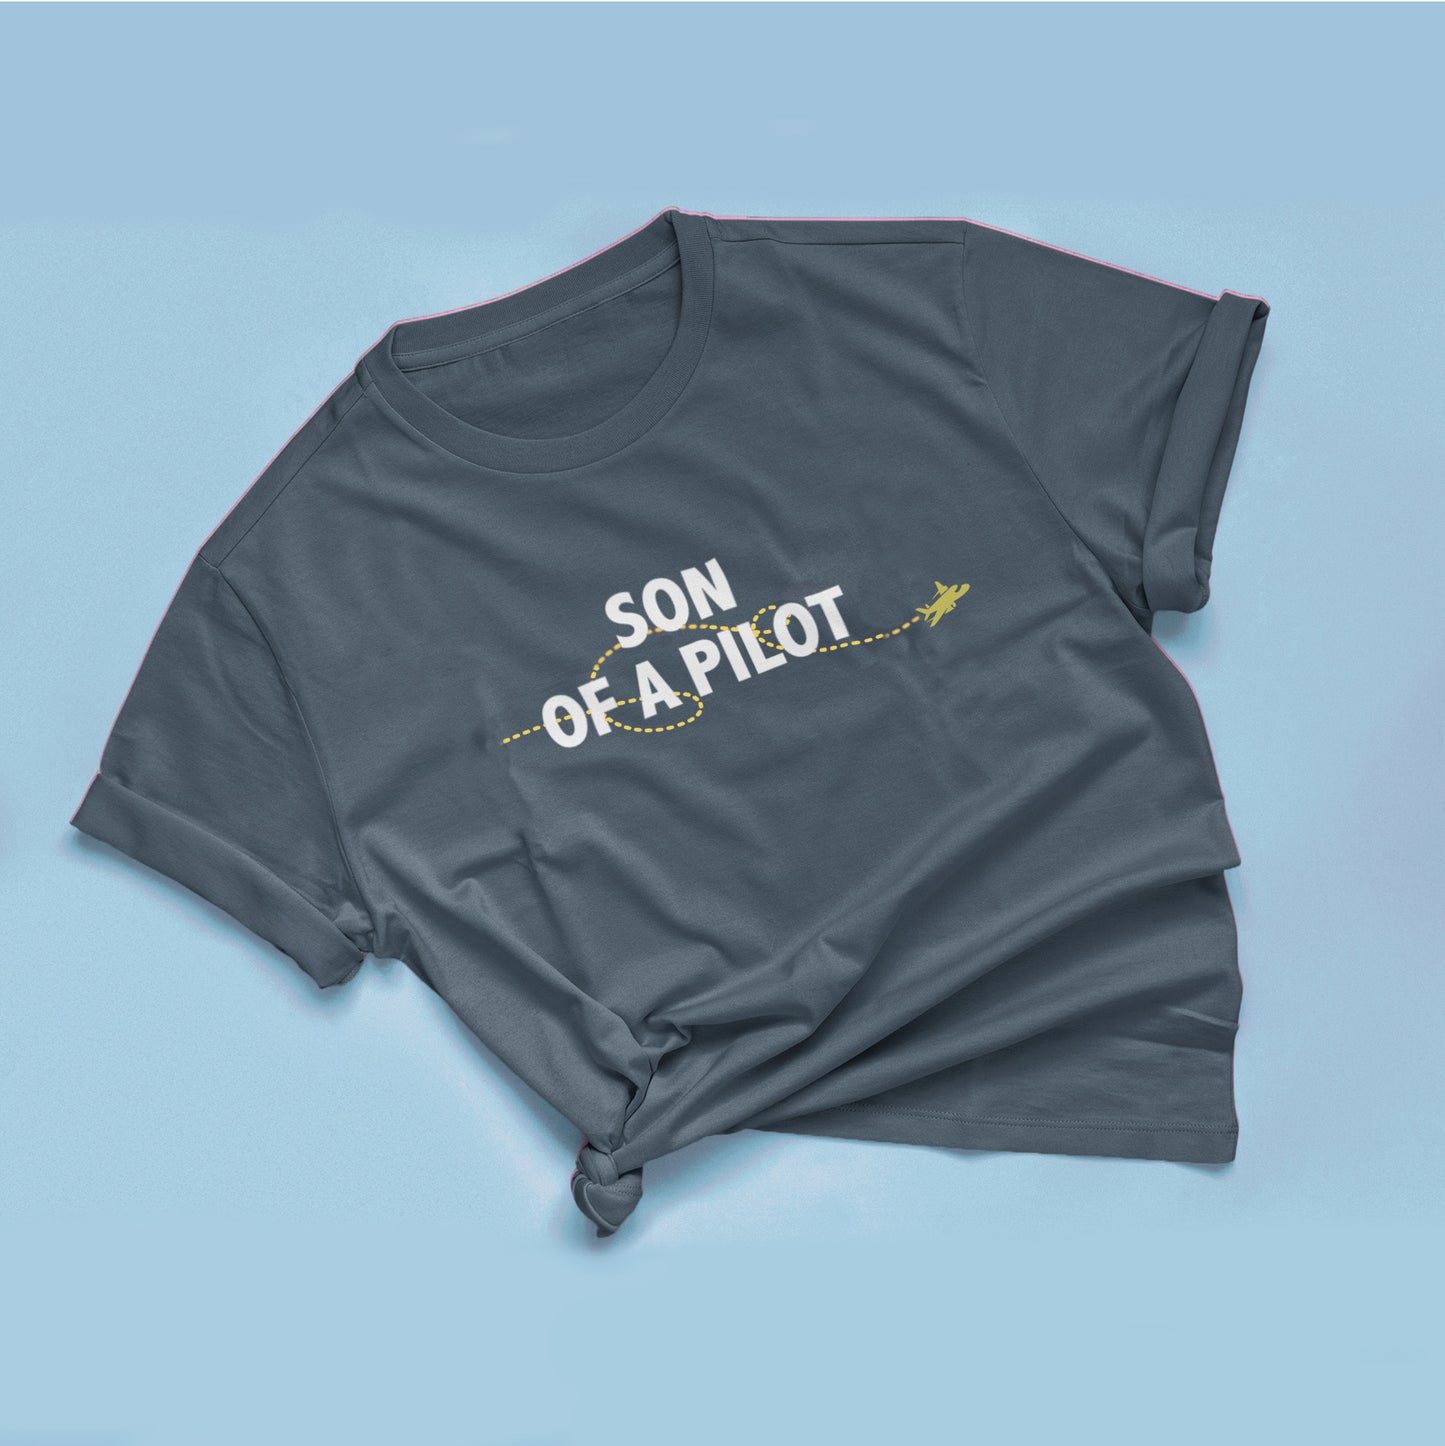 Son of the/a Pilot T-shirt